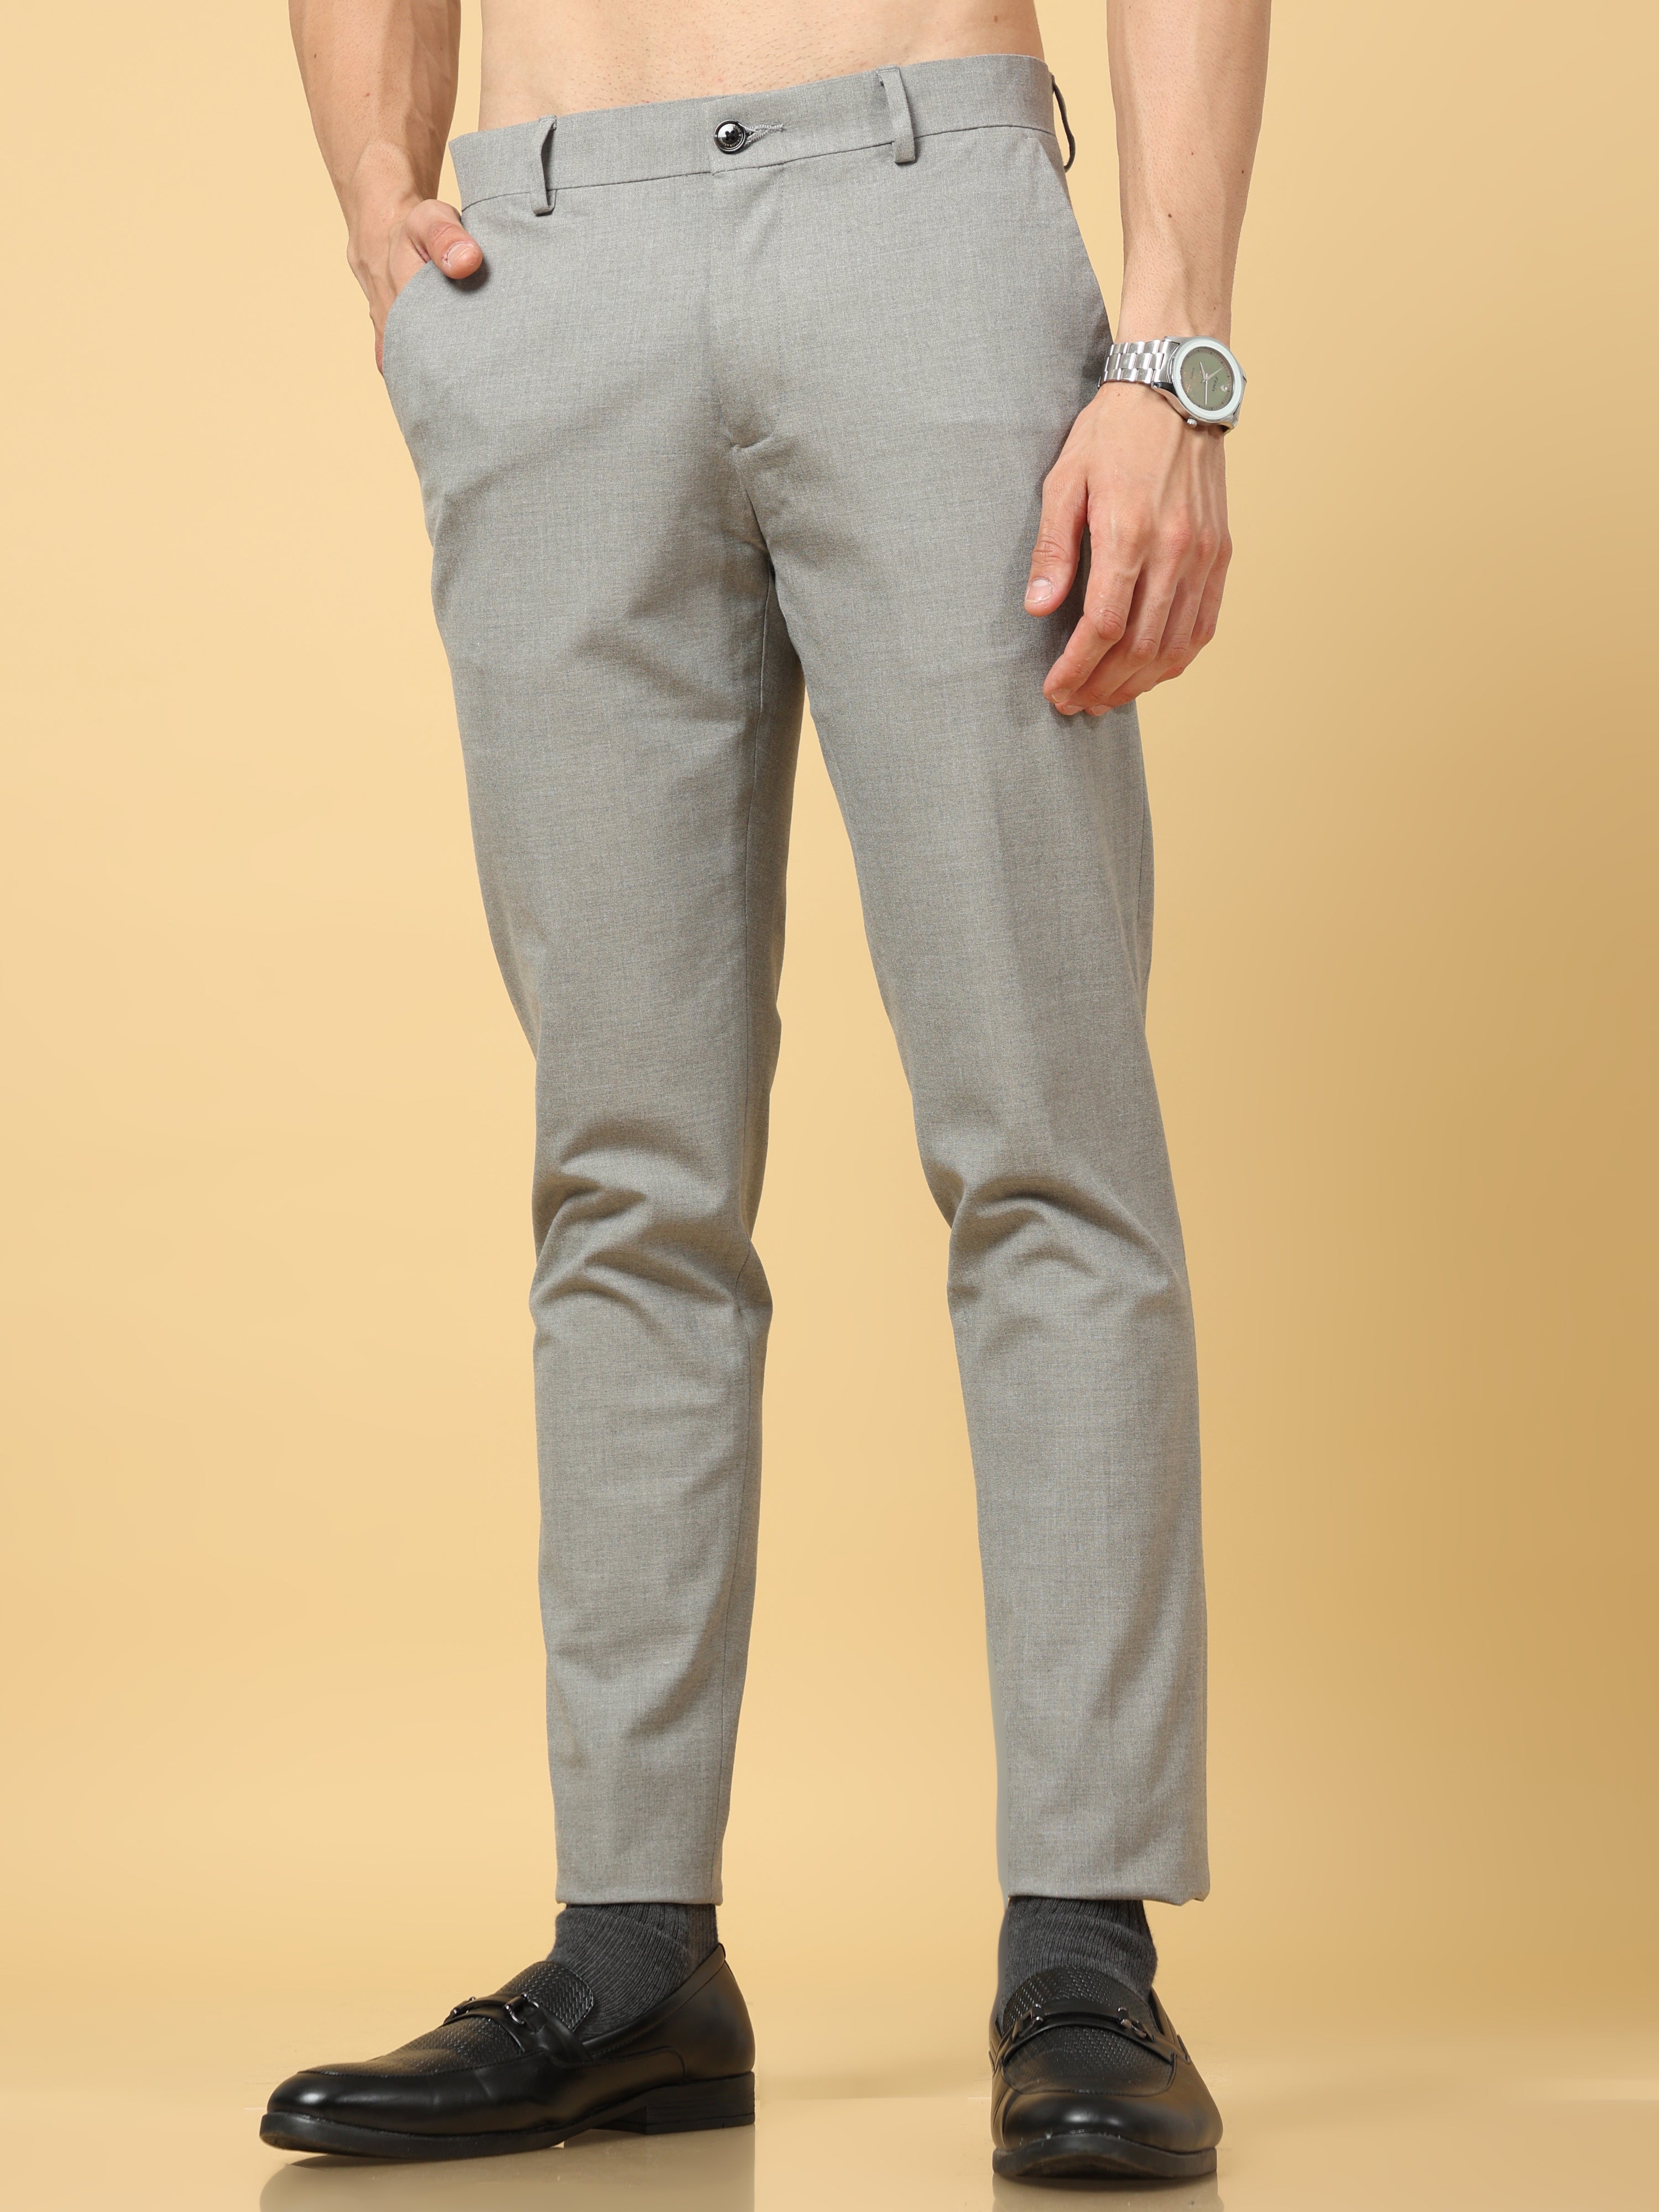 Buy HANGUP Formal Trousers Bottom Wear Slim Fit Formal Trousers Grey Color  (30) online